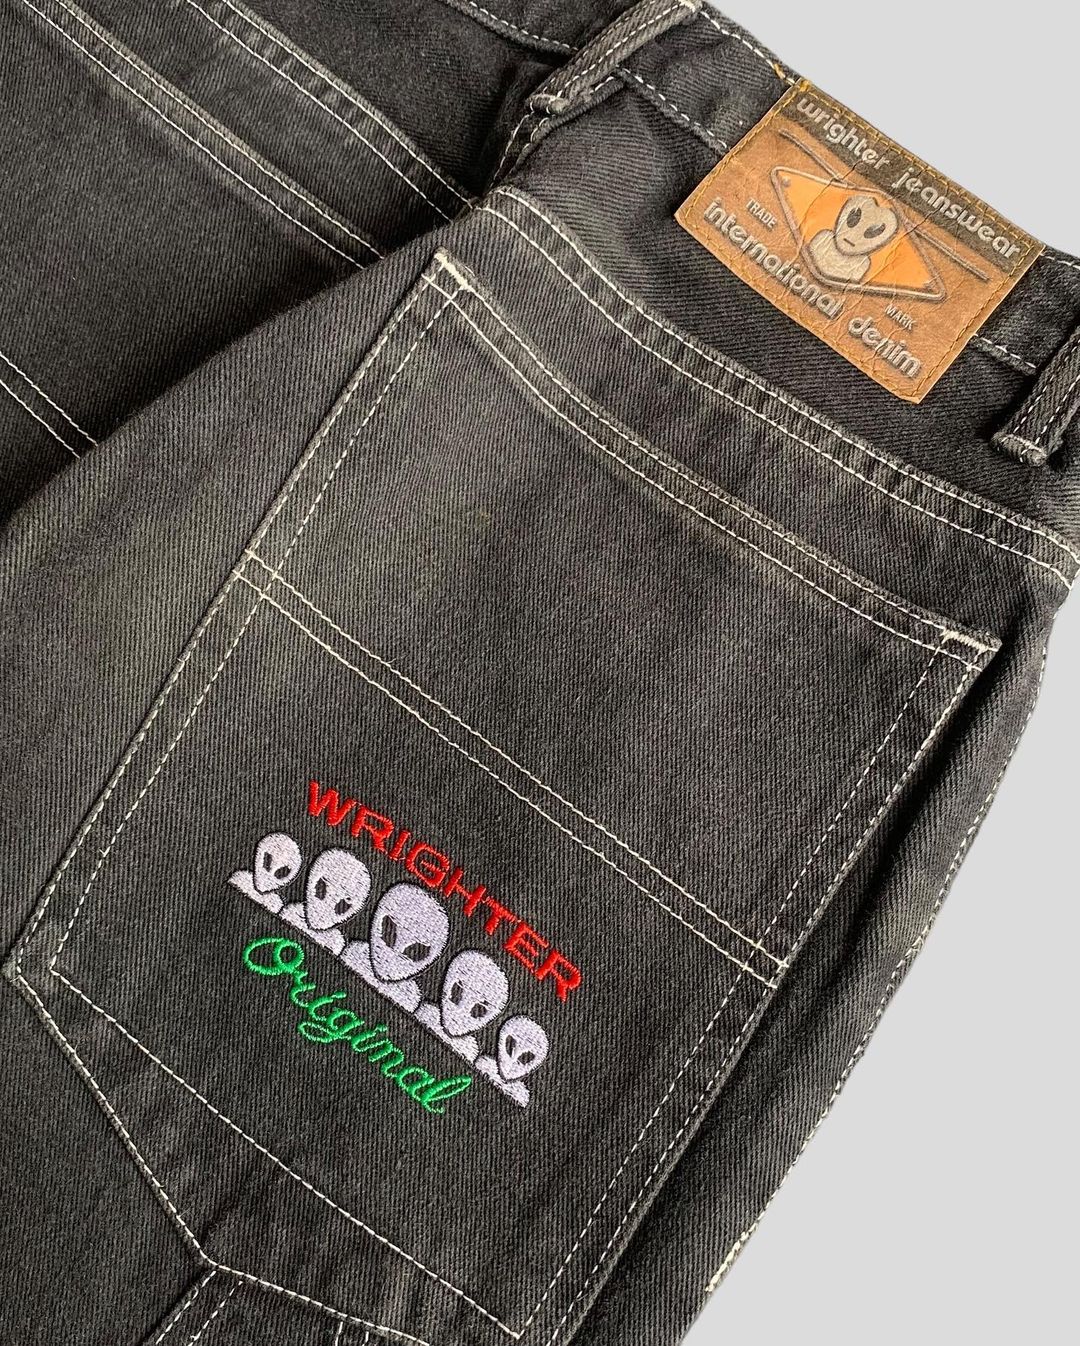 Retro "Bombshell" Unisex Baggy Jeans